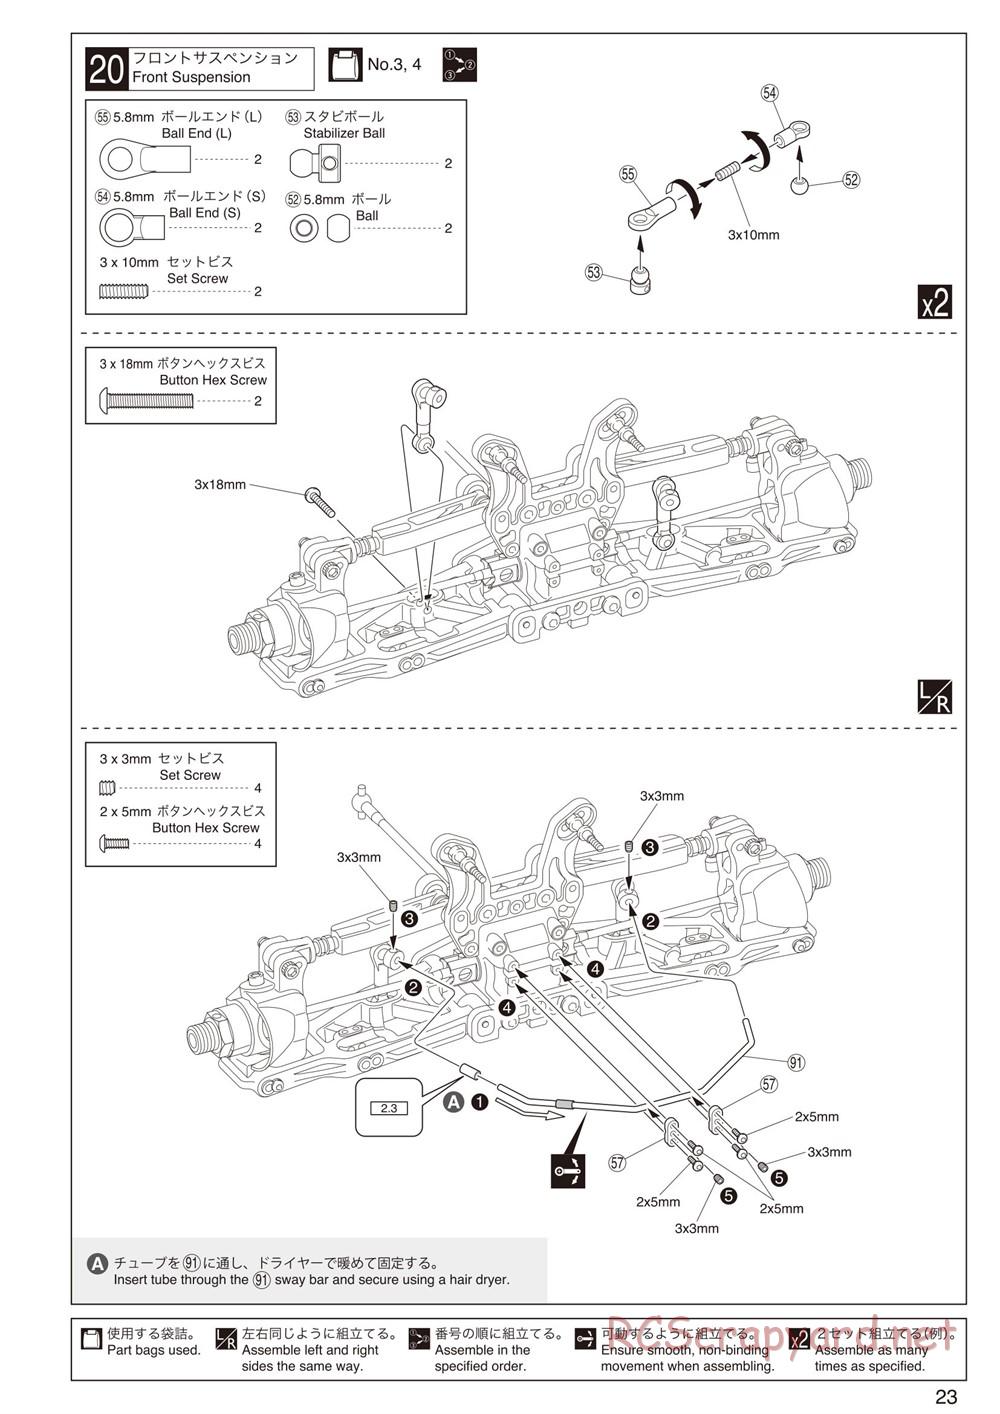 Kyosho - Inferno MP9 TKI2 - Manual - Page 23